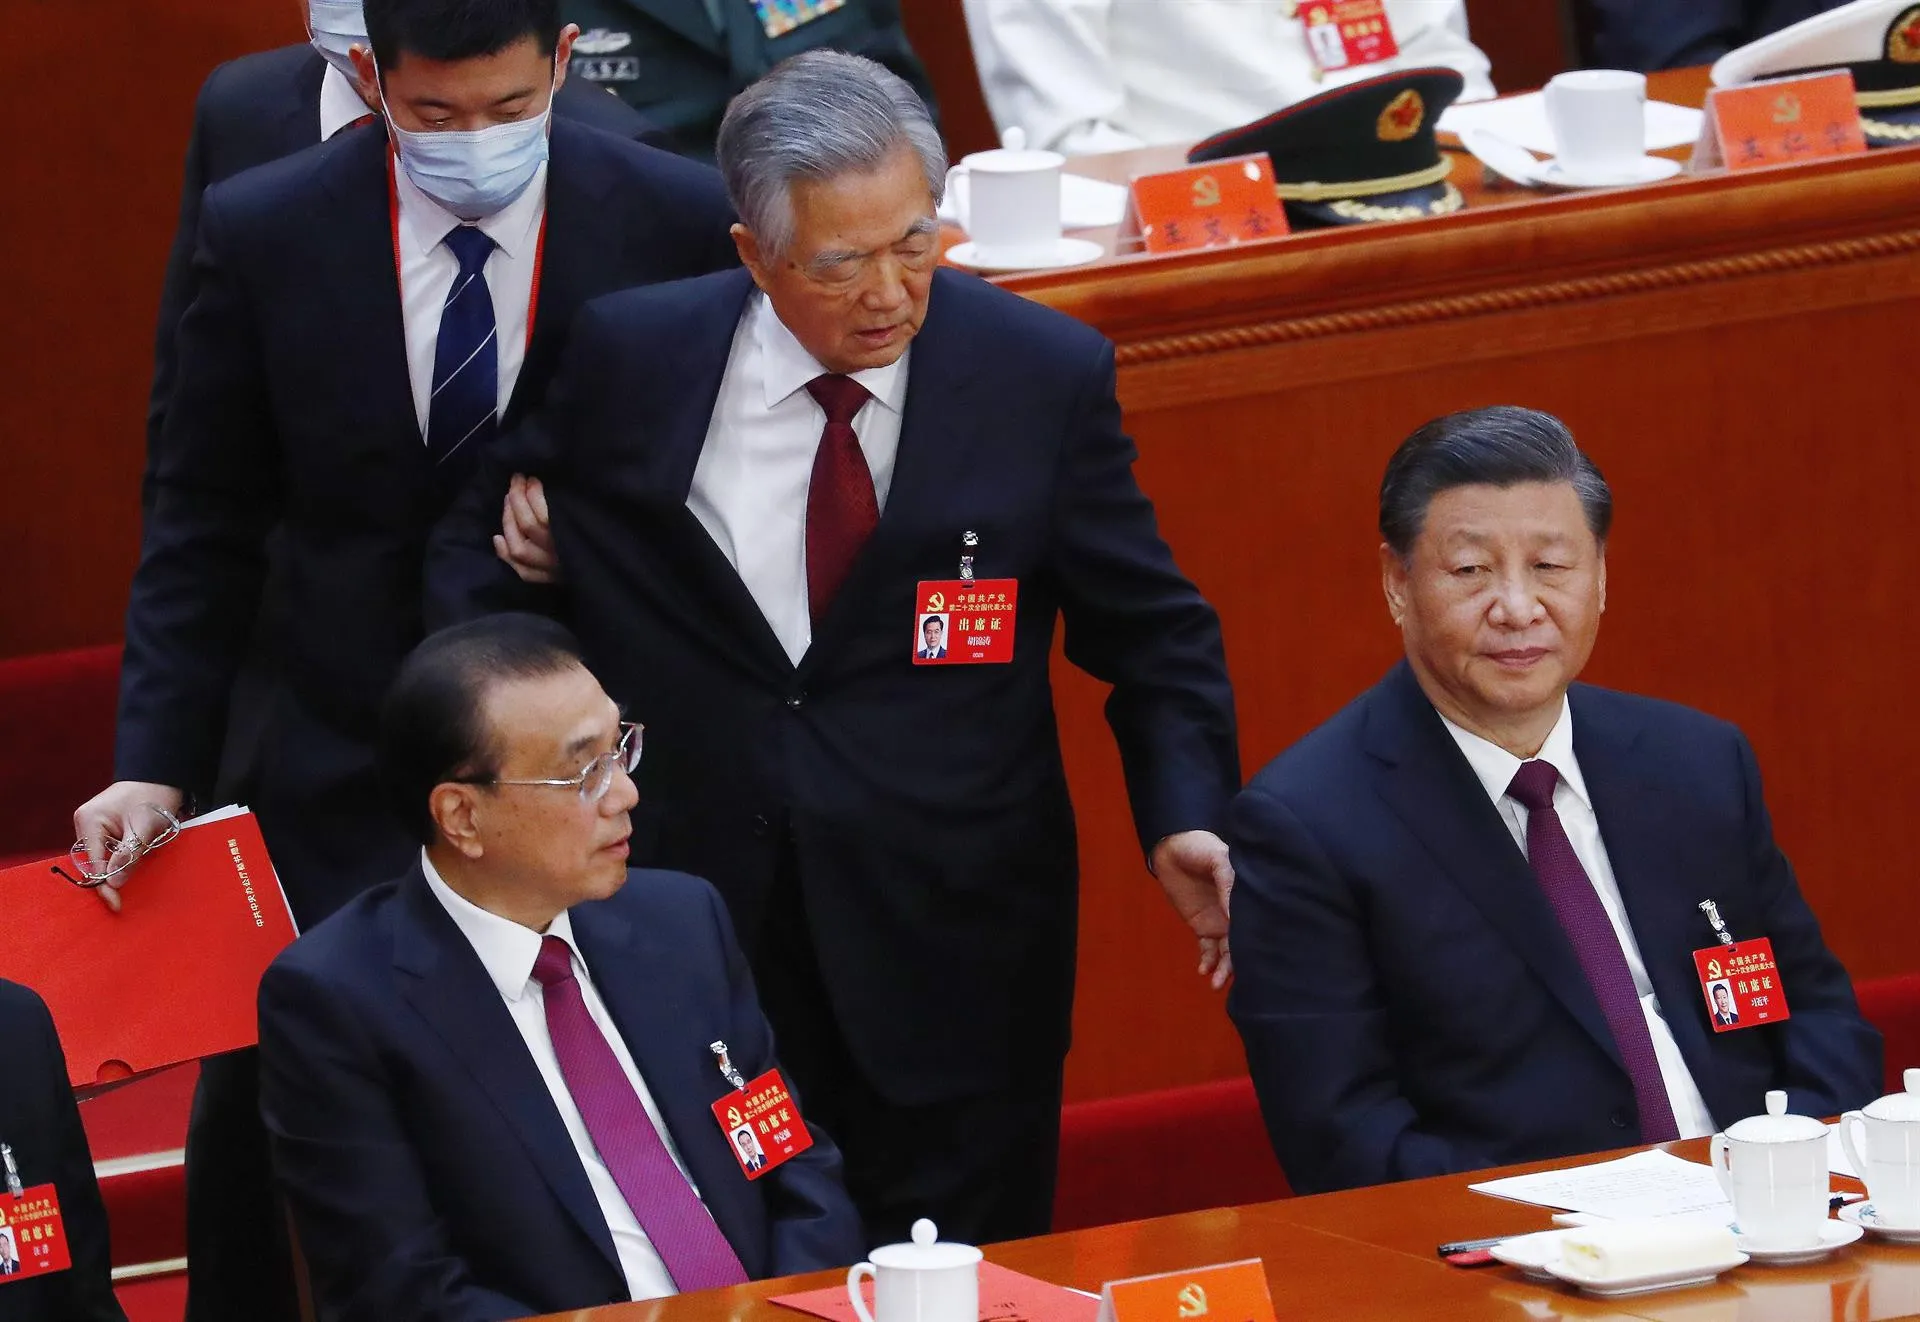 VIDEO Expresidente Hu Jintao escoltado fuera del Congreso PCCh en aparente purga